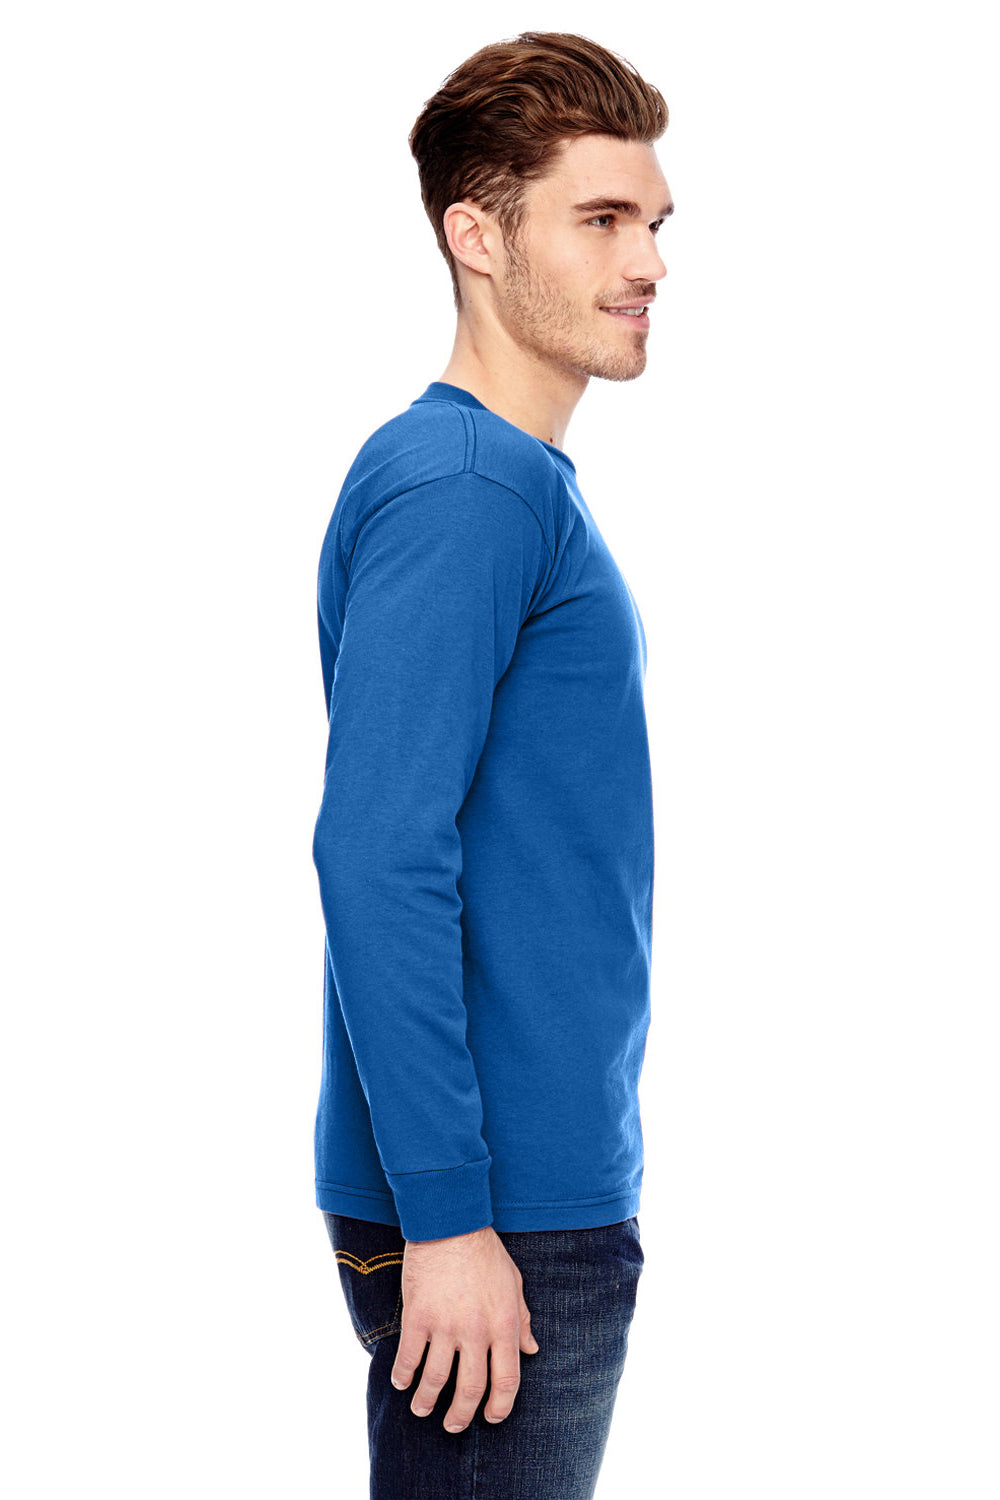 Bayside BA6100 Mens USA Made Long Sleeve Crewneck T-Shirt Royal Blue Model Side